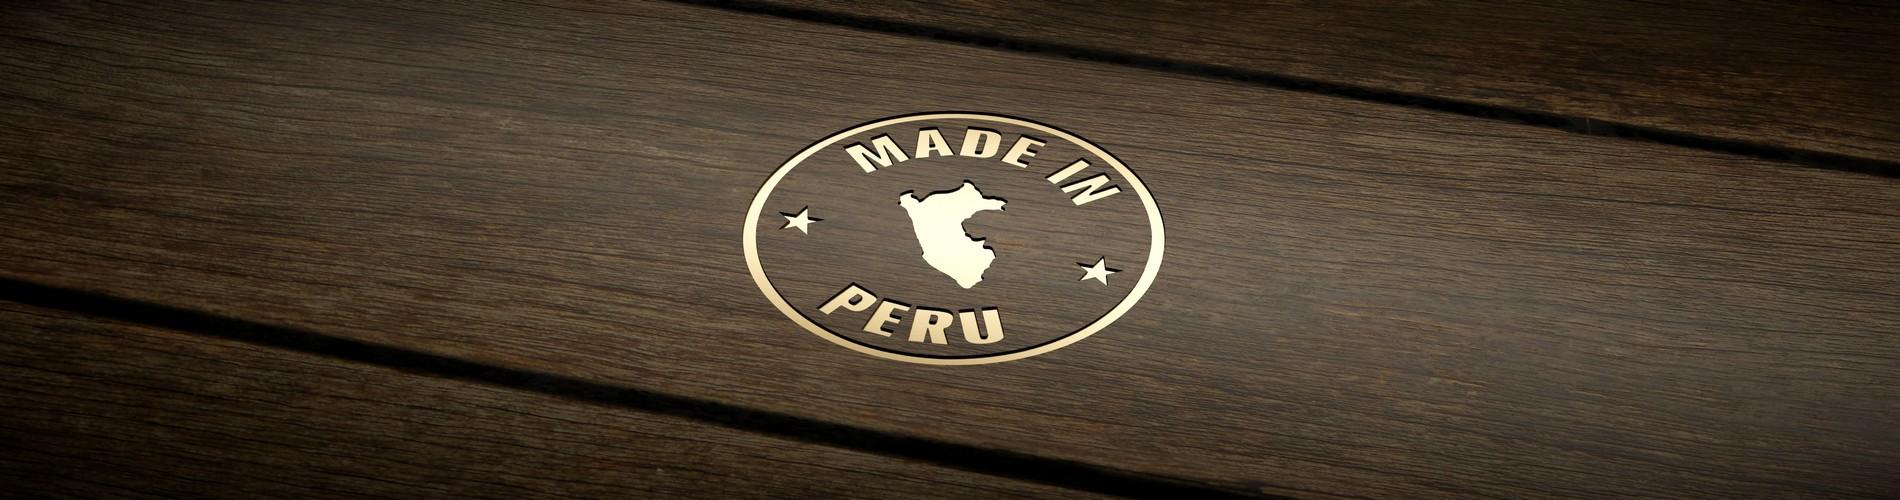 Gold in Peru - A Complex Relationship Through Time